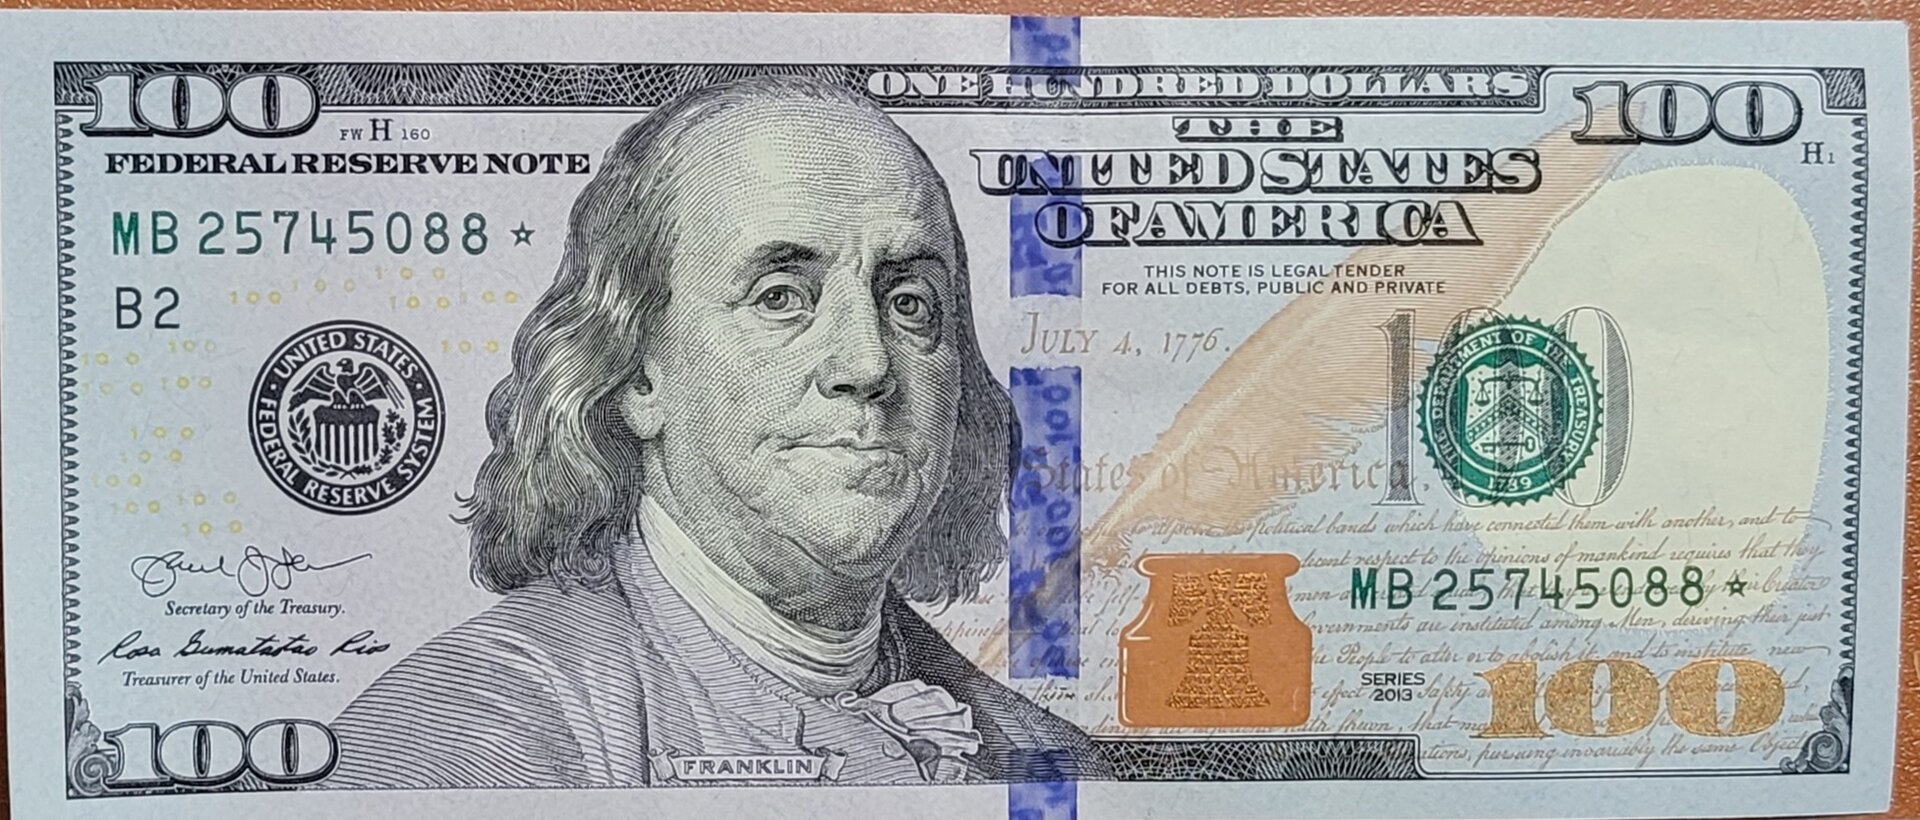 100 $ star note.jpg